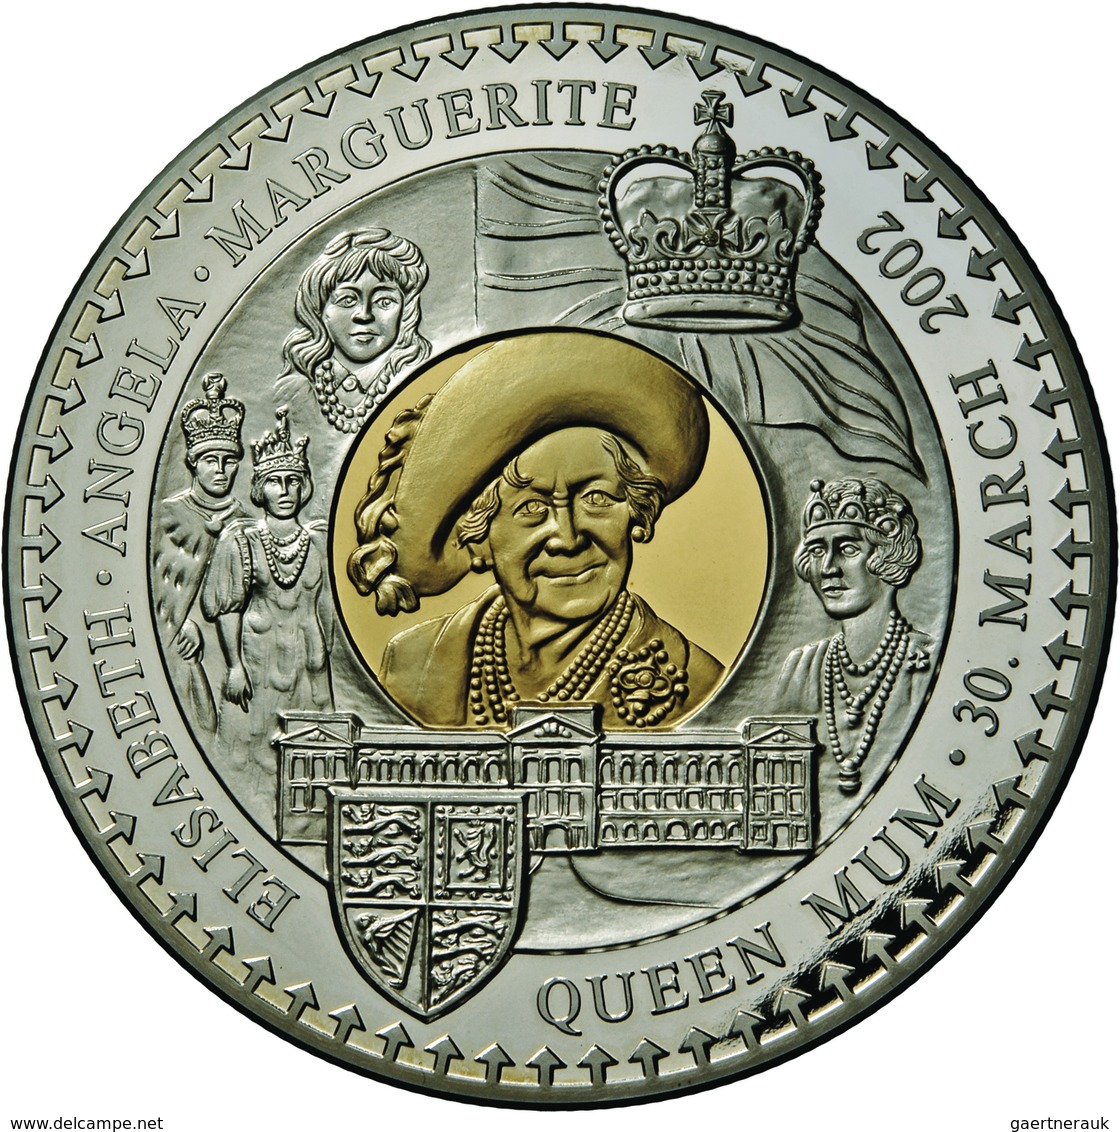 Sambia: 100.000 Kwacha 2002 Proof, HM Elizabeth Queen Mother 1900-2002, 3 Kg 999/1000 Fine Silver, S - Zambia